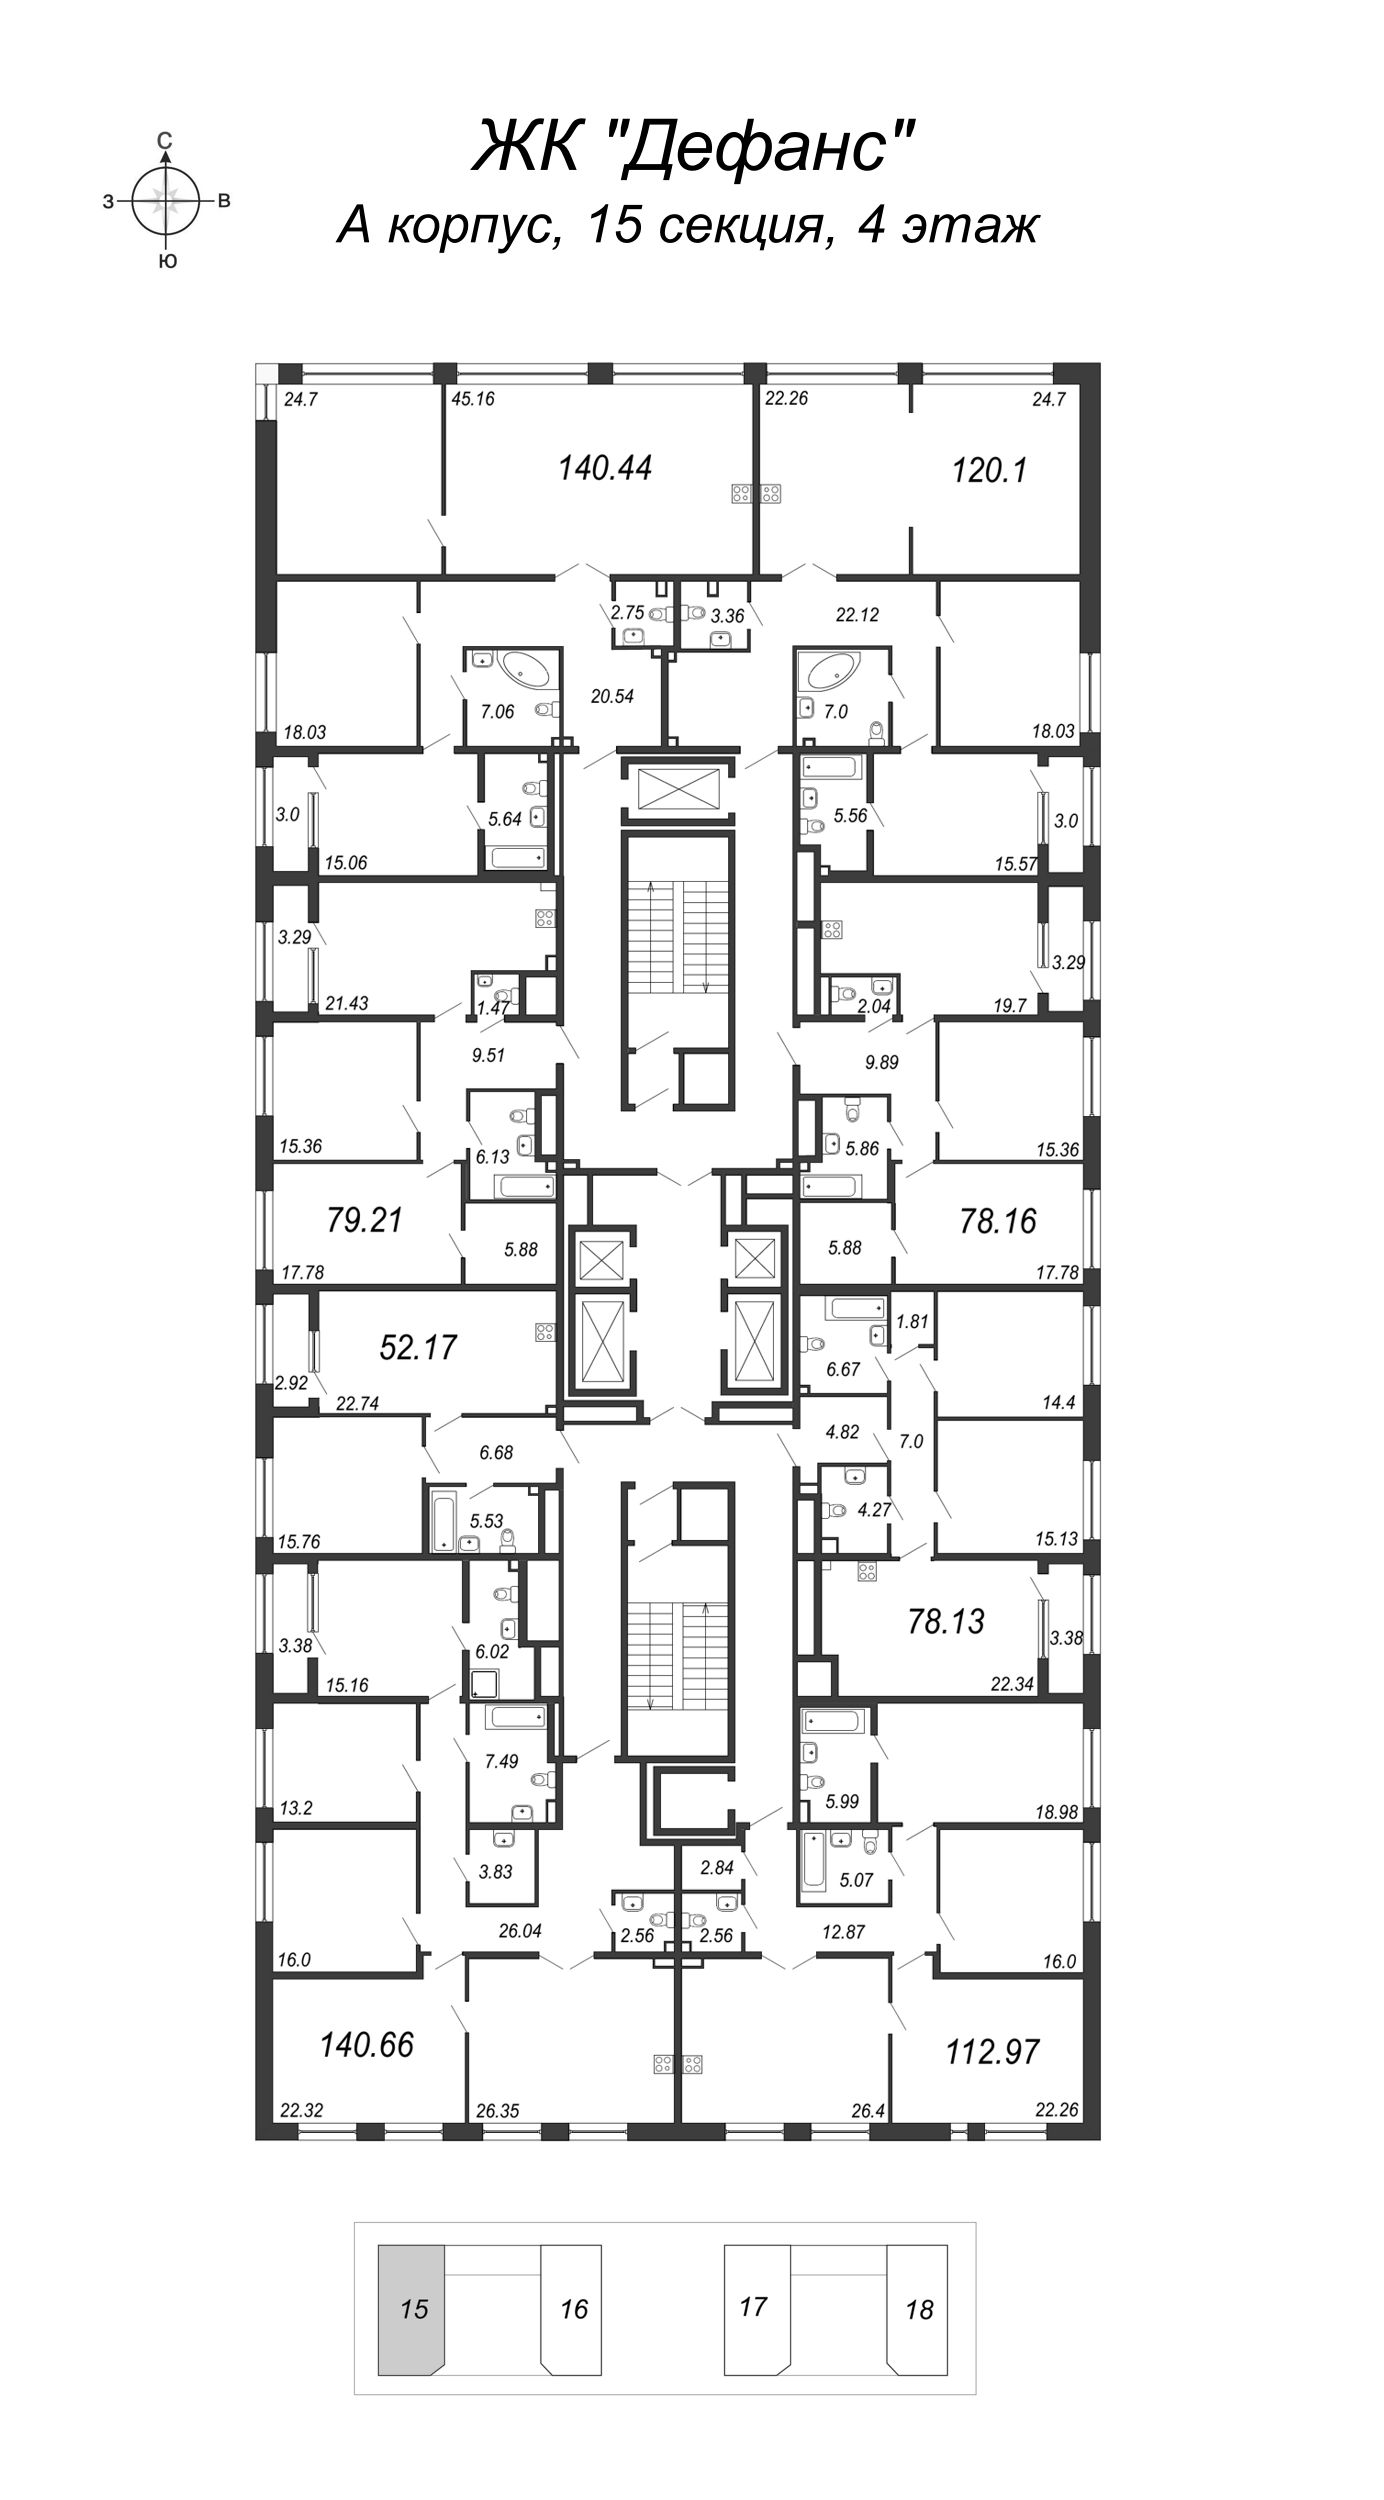 4-комнатная (Евро) квартира, 112.97 м² - планировка этажа